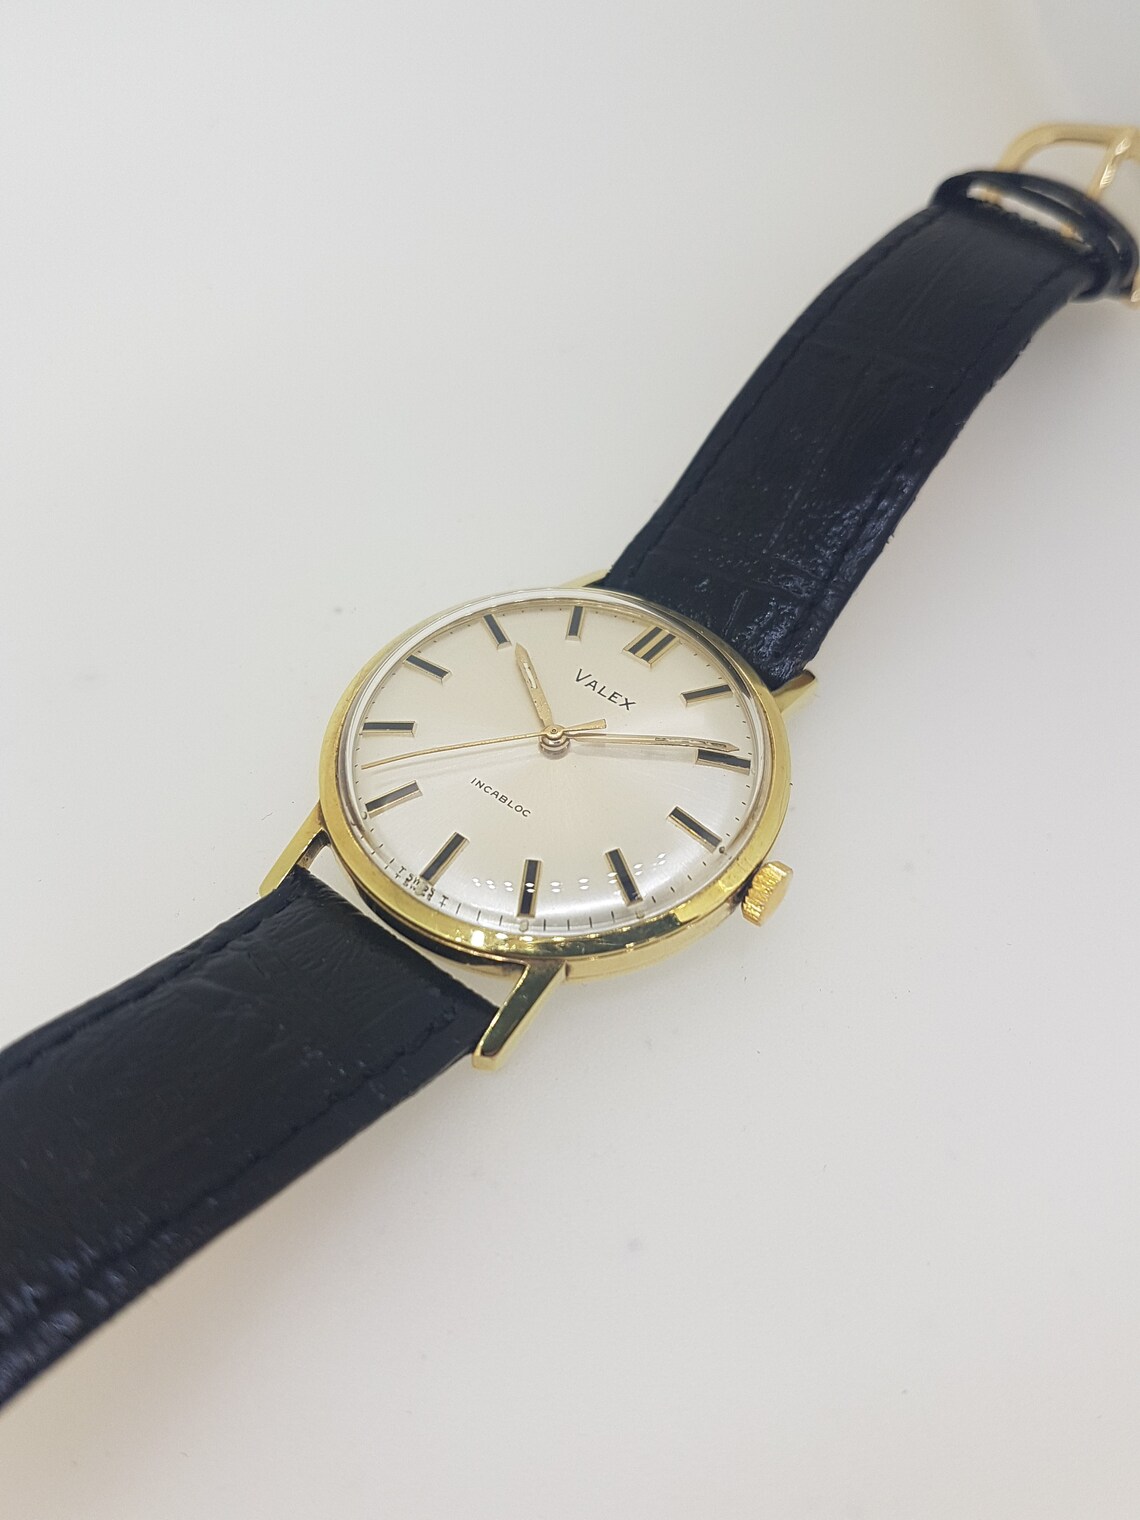 Swiss Made Valex Watch C.1960 - Etsy